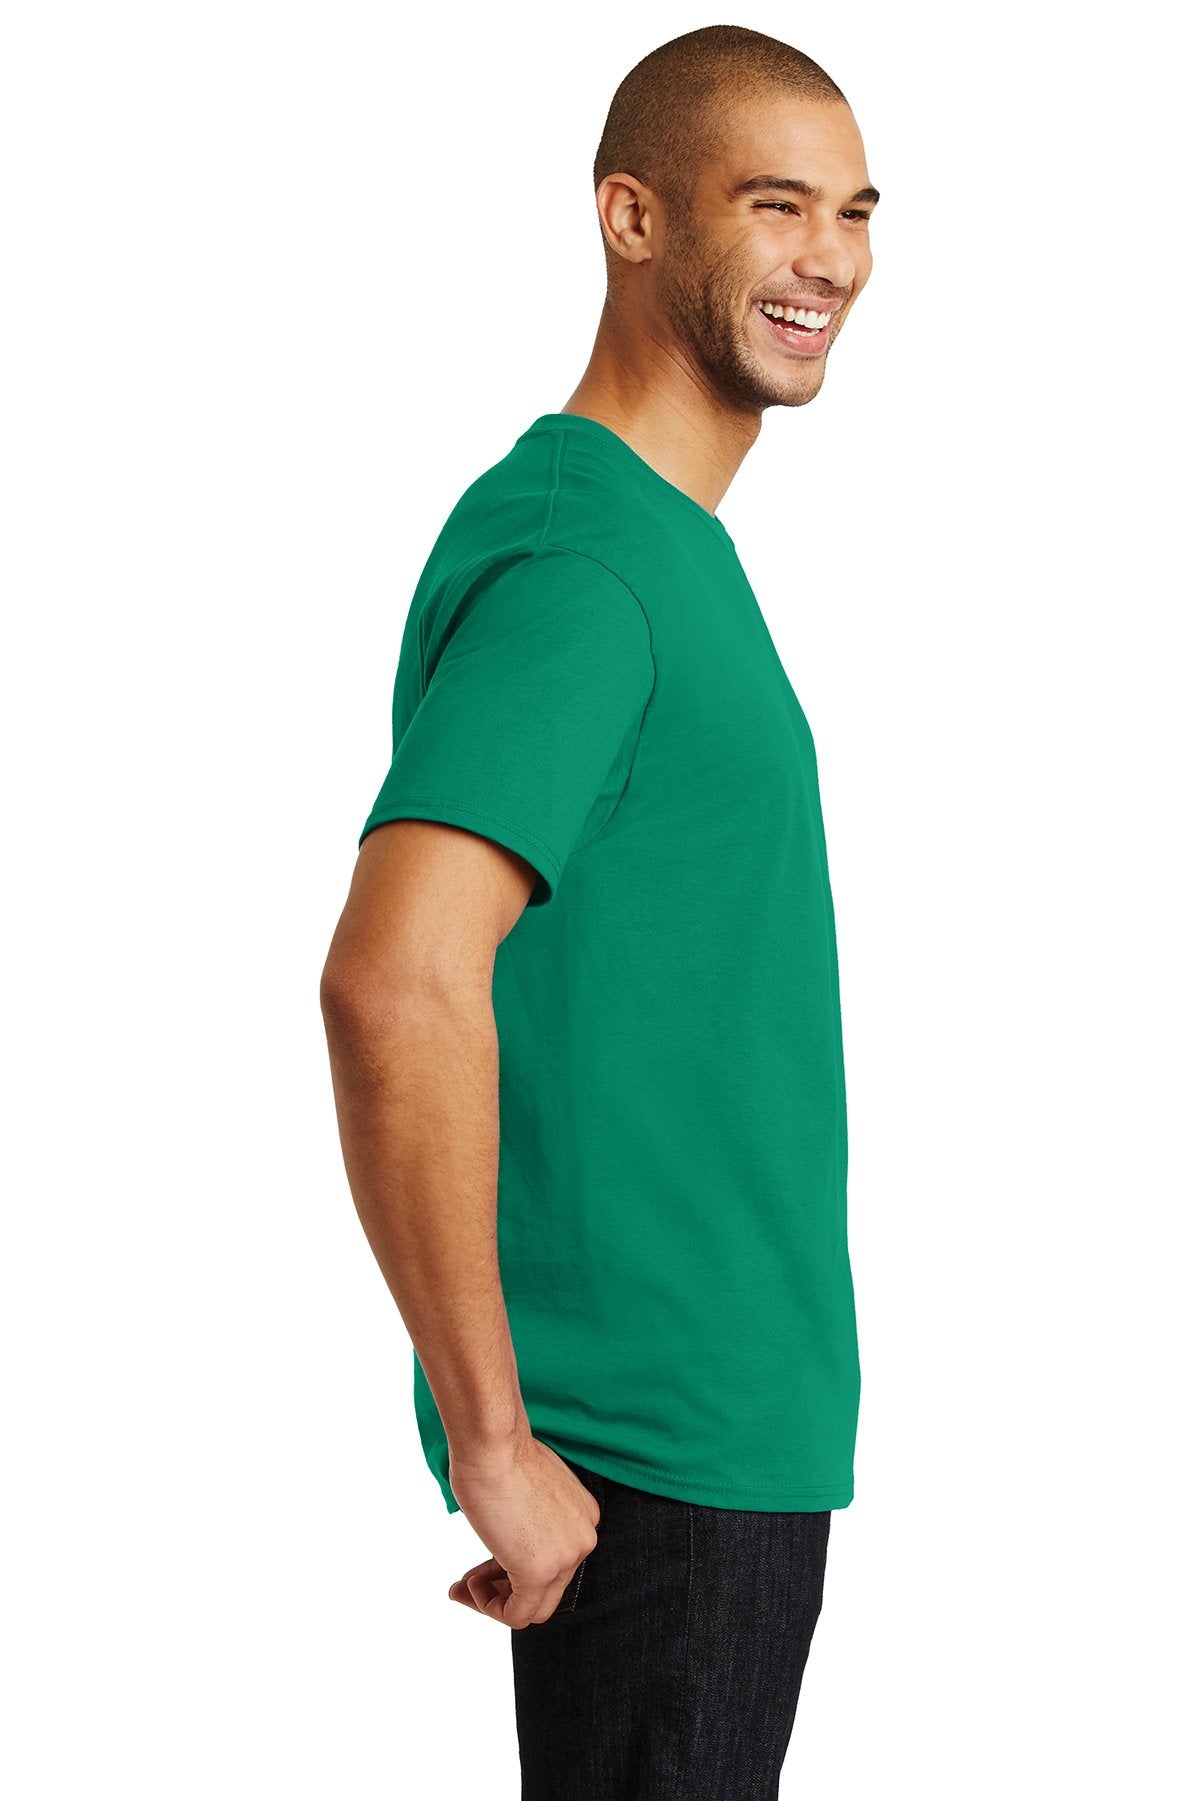 hanes tagless cotton t shirt 5250 kelly green